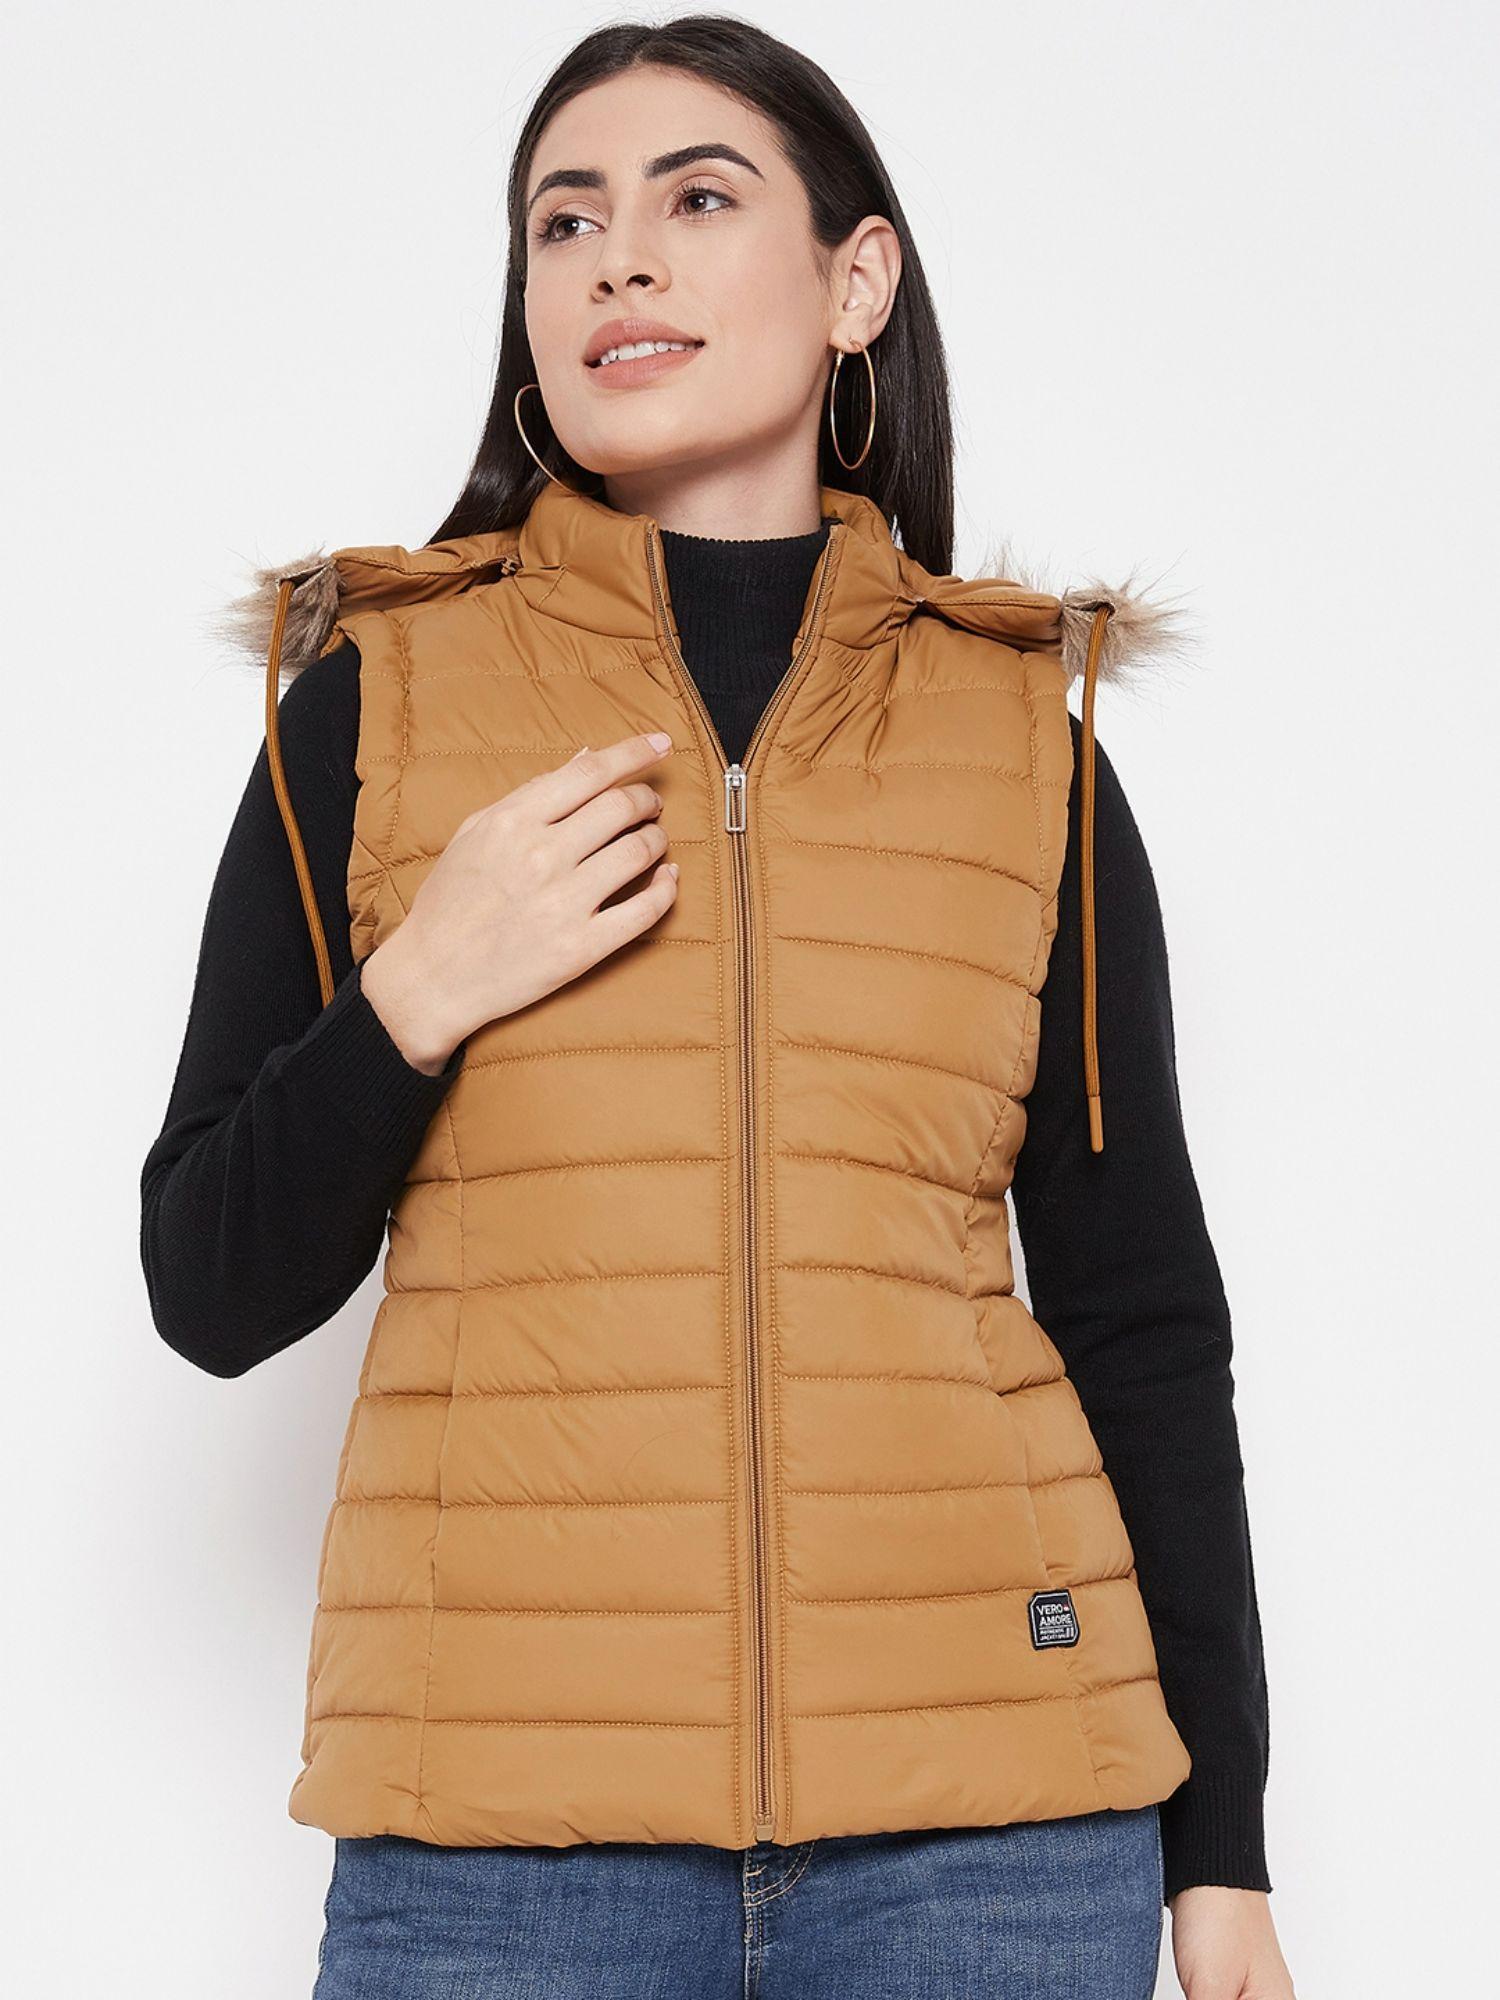 women winterwear sleevless jacket-mustard